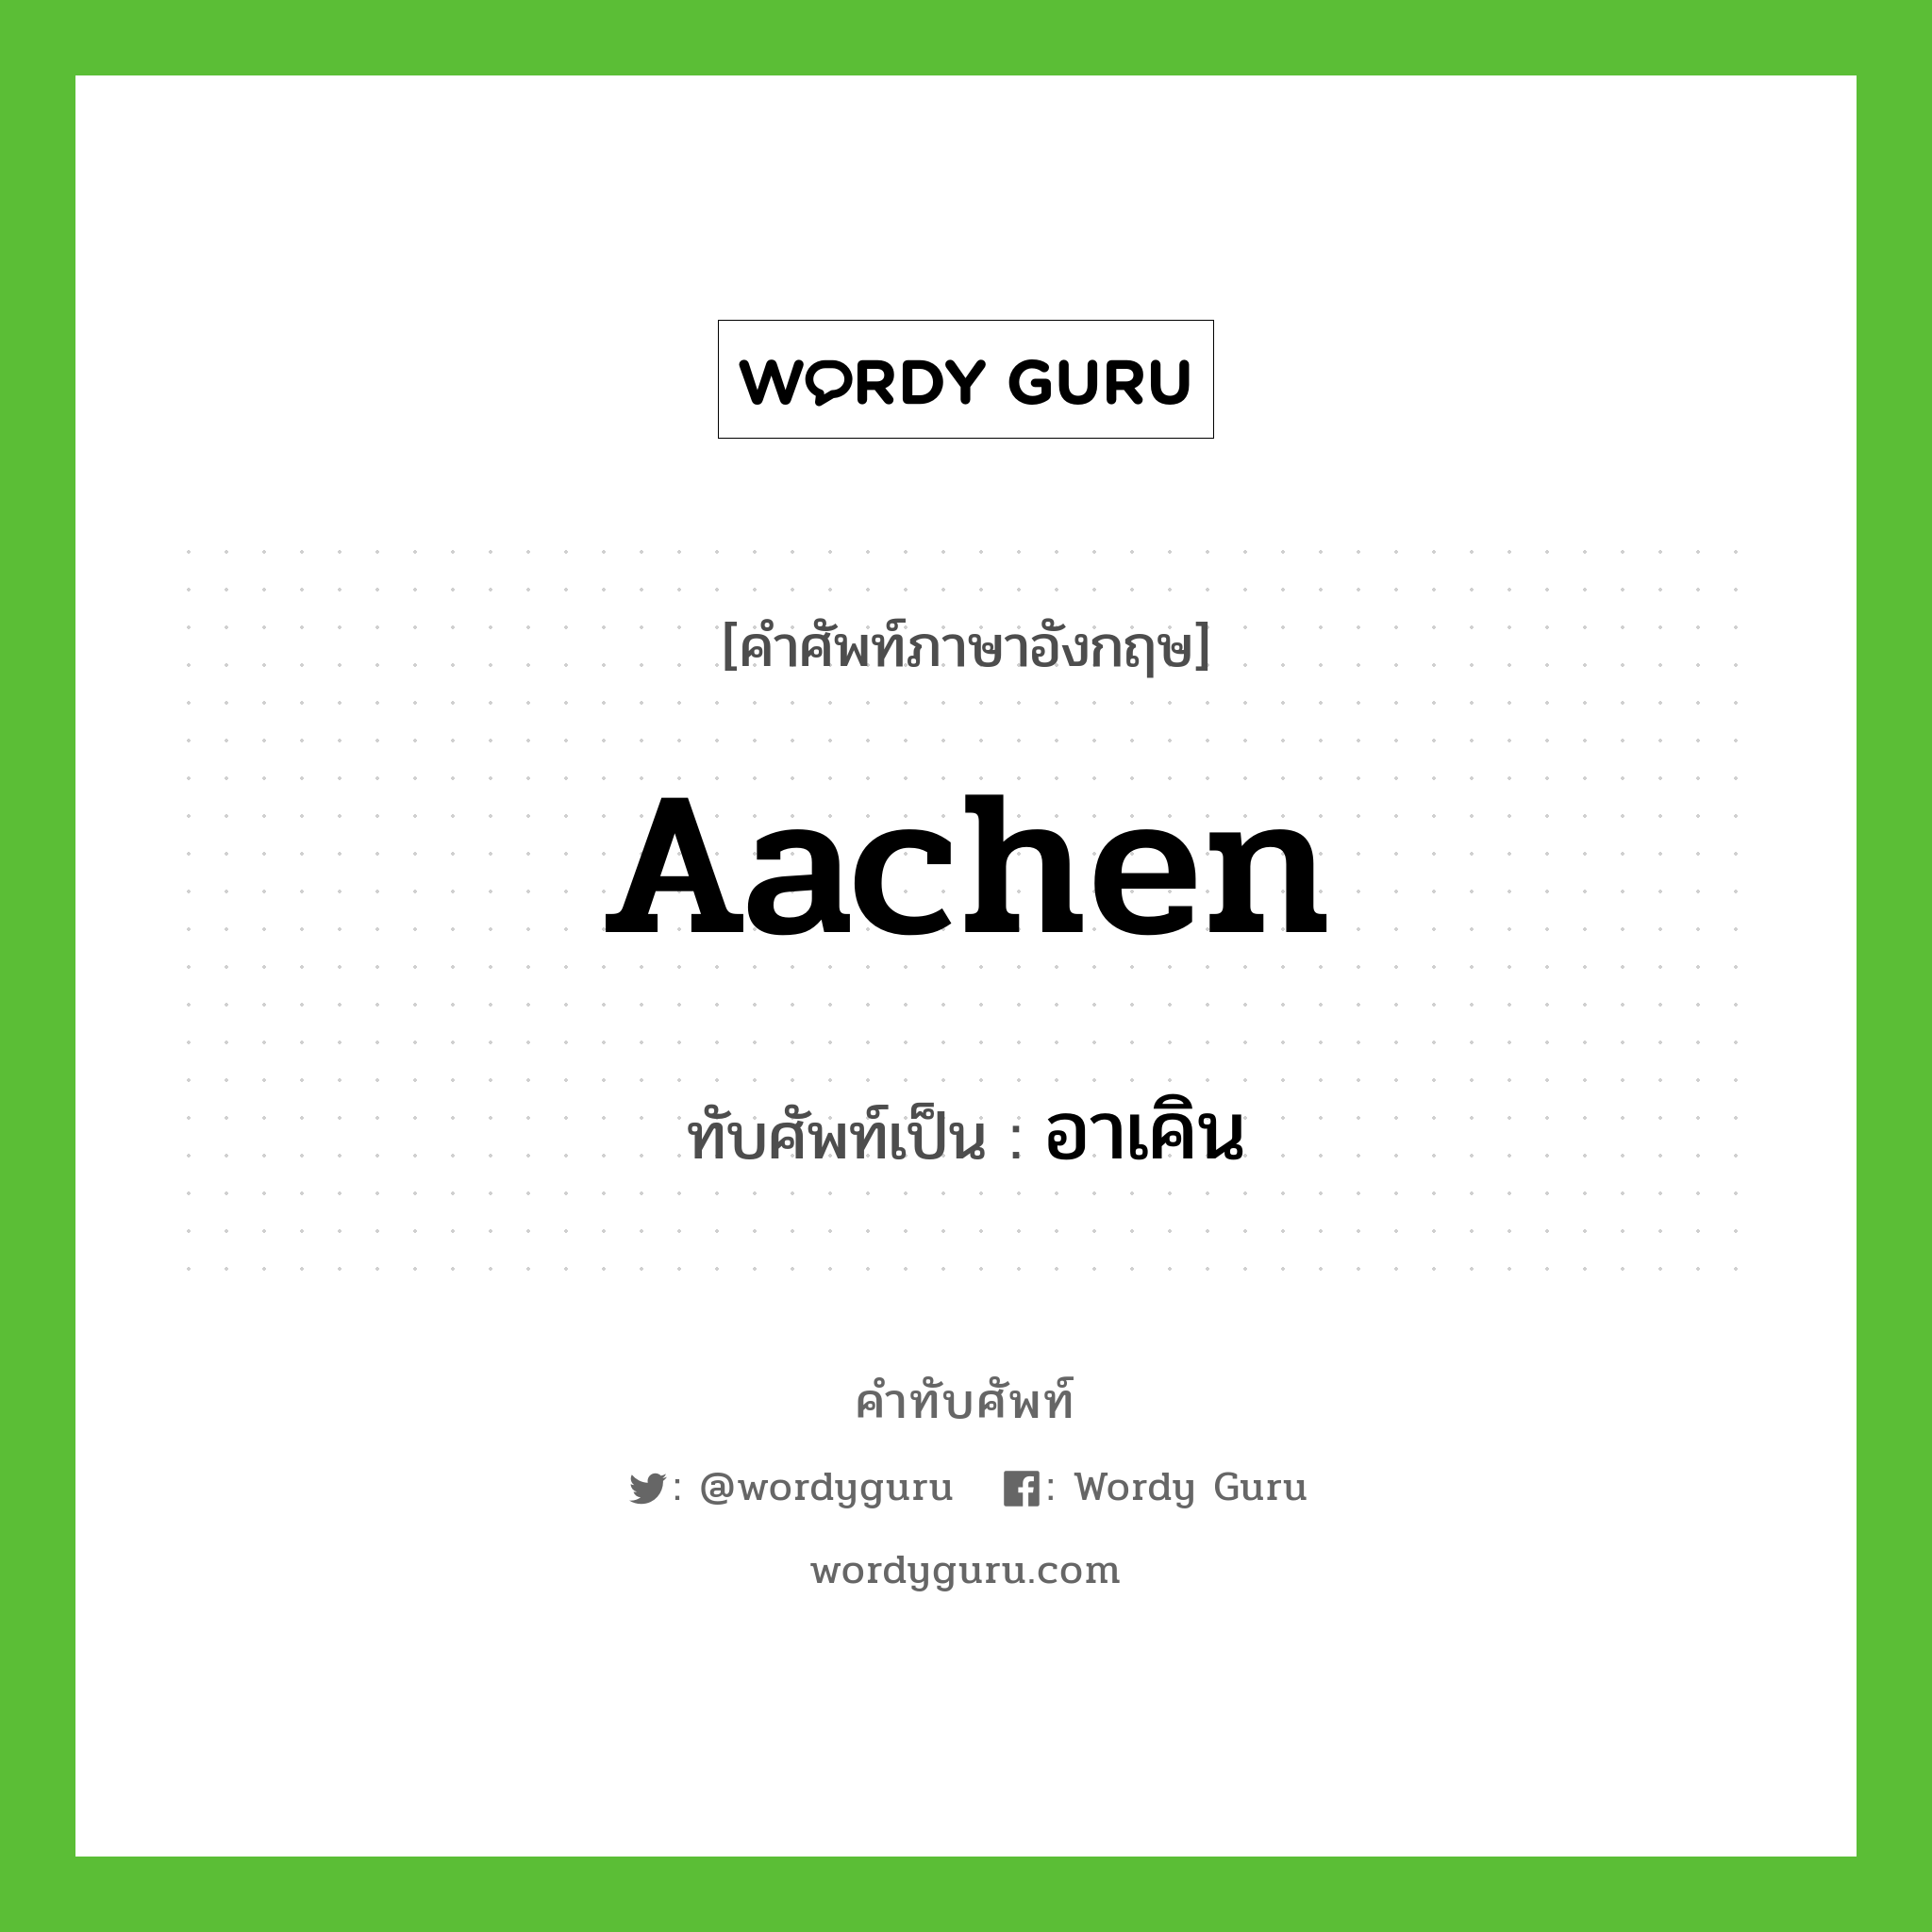 Aachen เขียนเป็นคำไทยว่าอะไร?, คำศัพท์ภาษาอังกฤษ Aachen ทับศัพท์เป็น อาเคิน